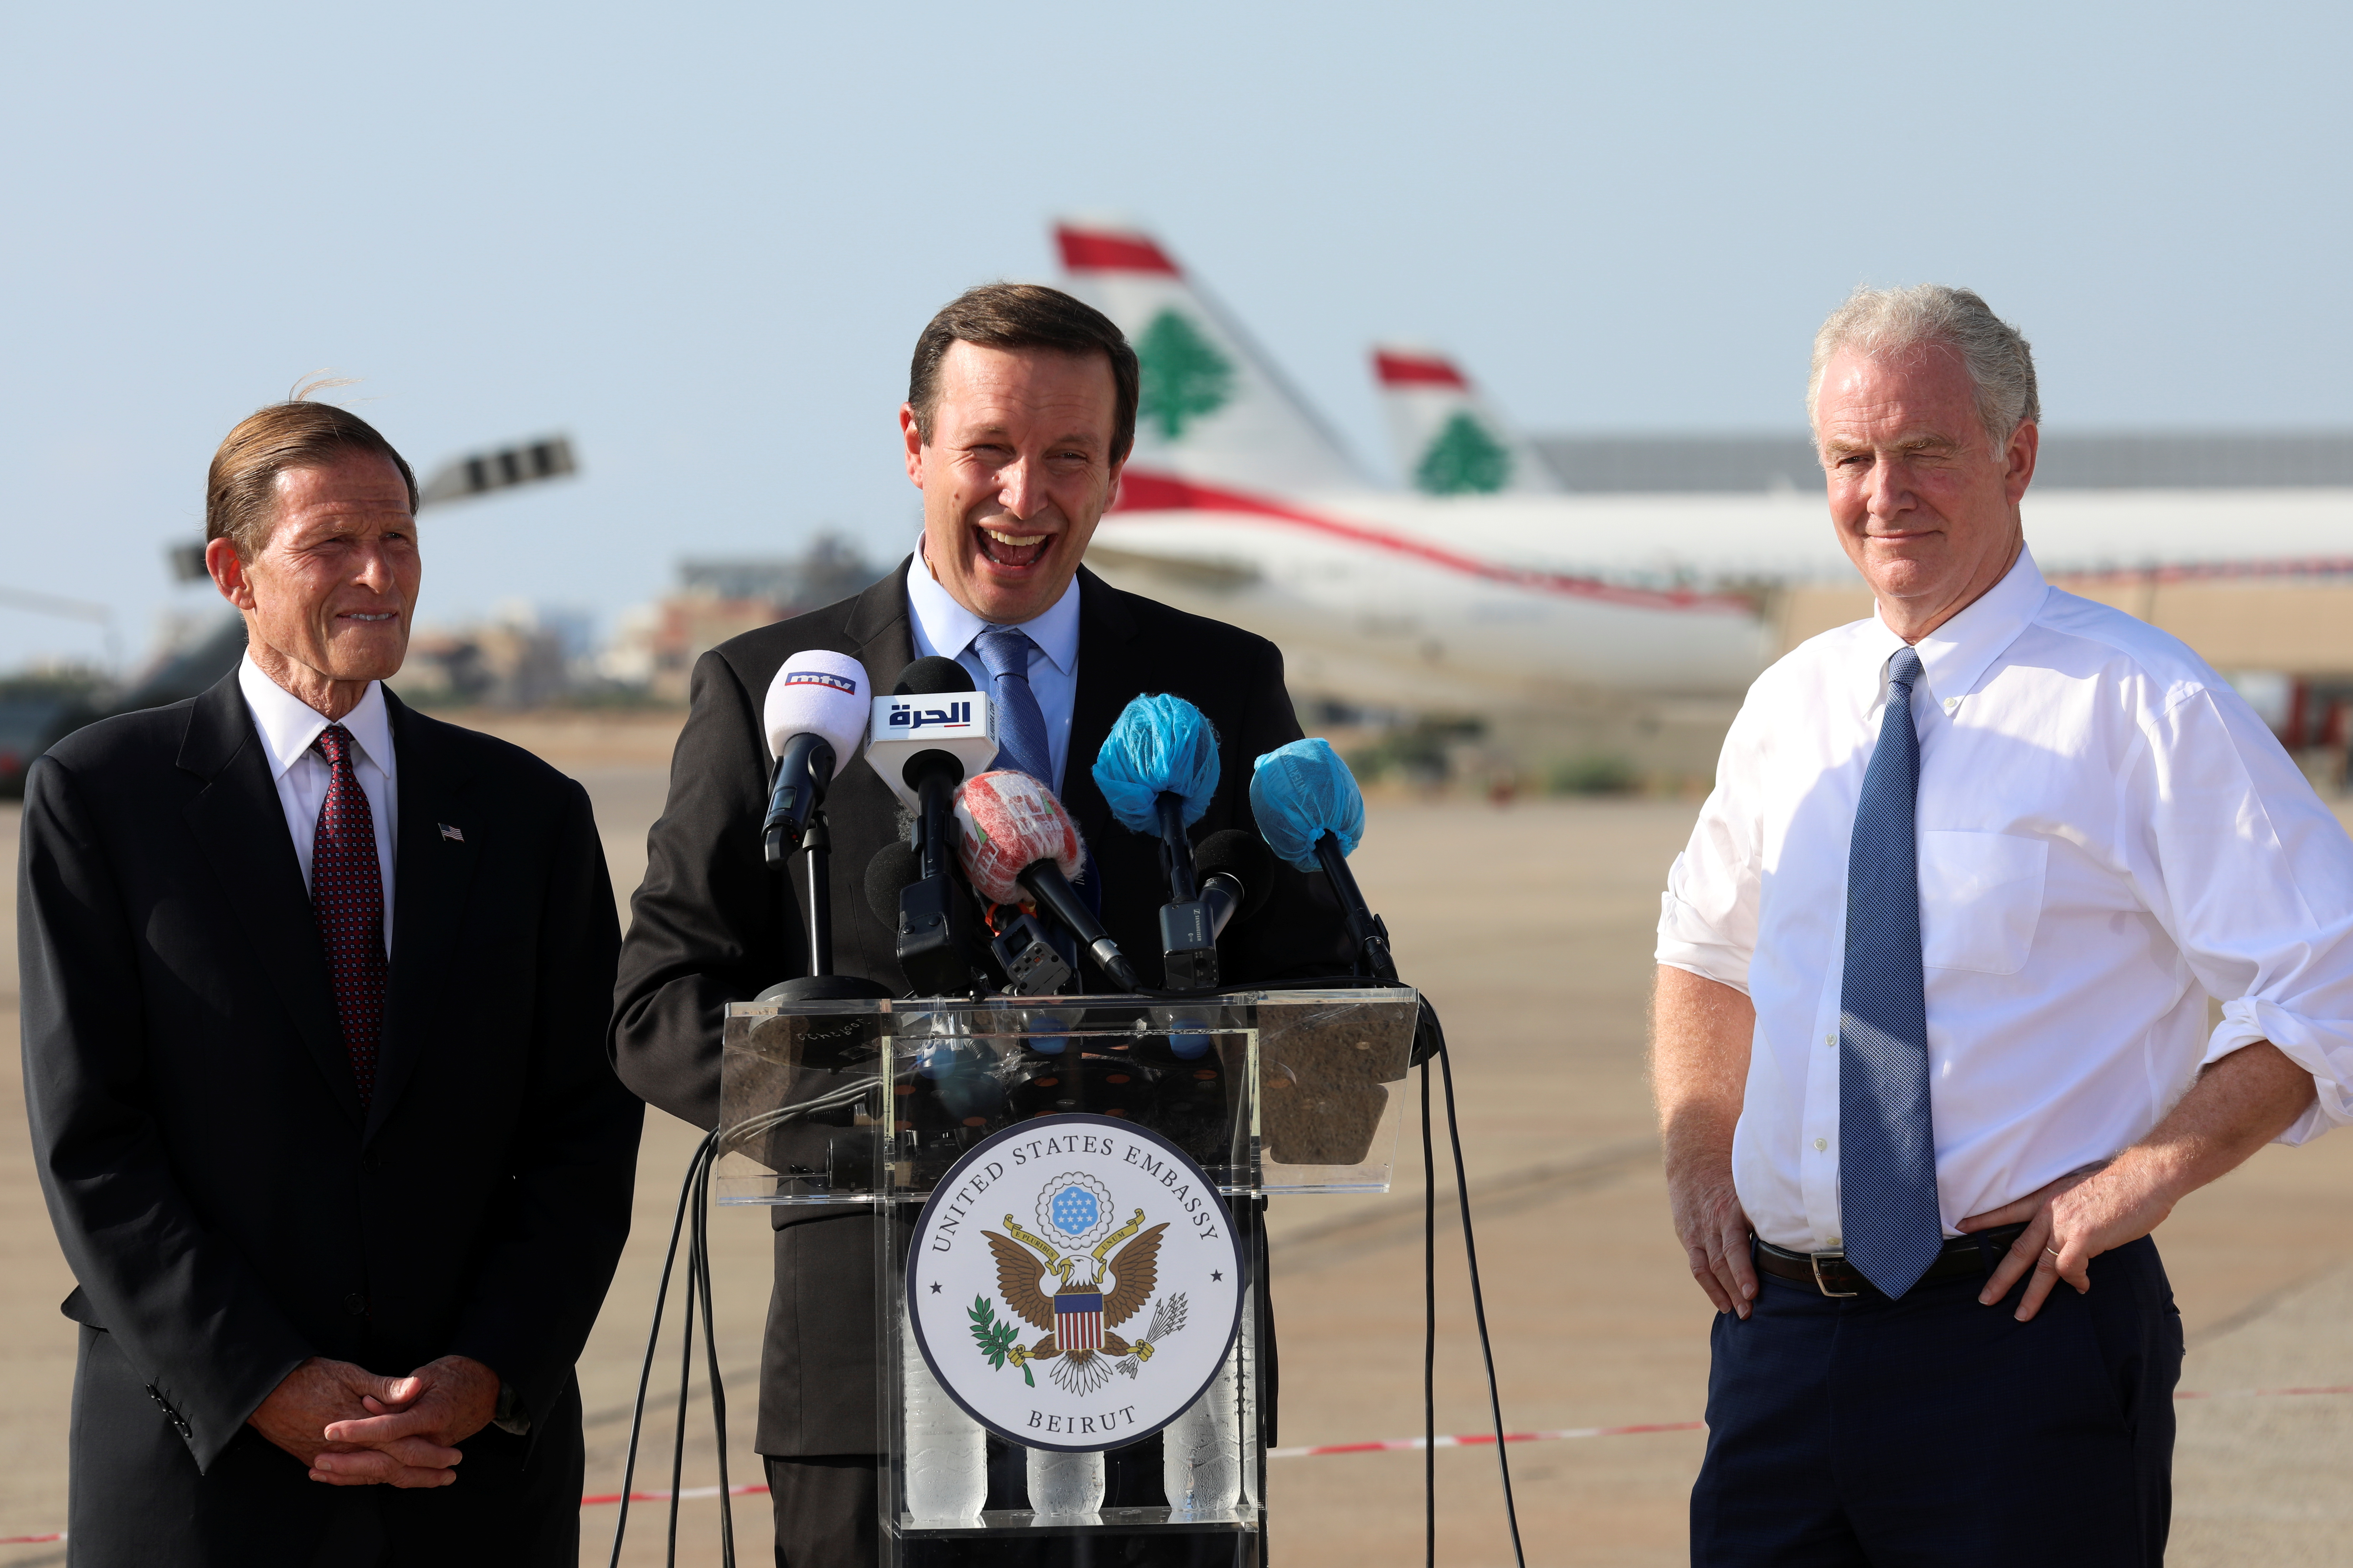 U.S. Senator Christopher S. Murphy attends a news conference at Beirut International Airport in Beirut